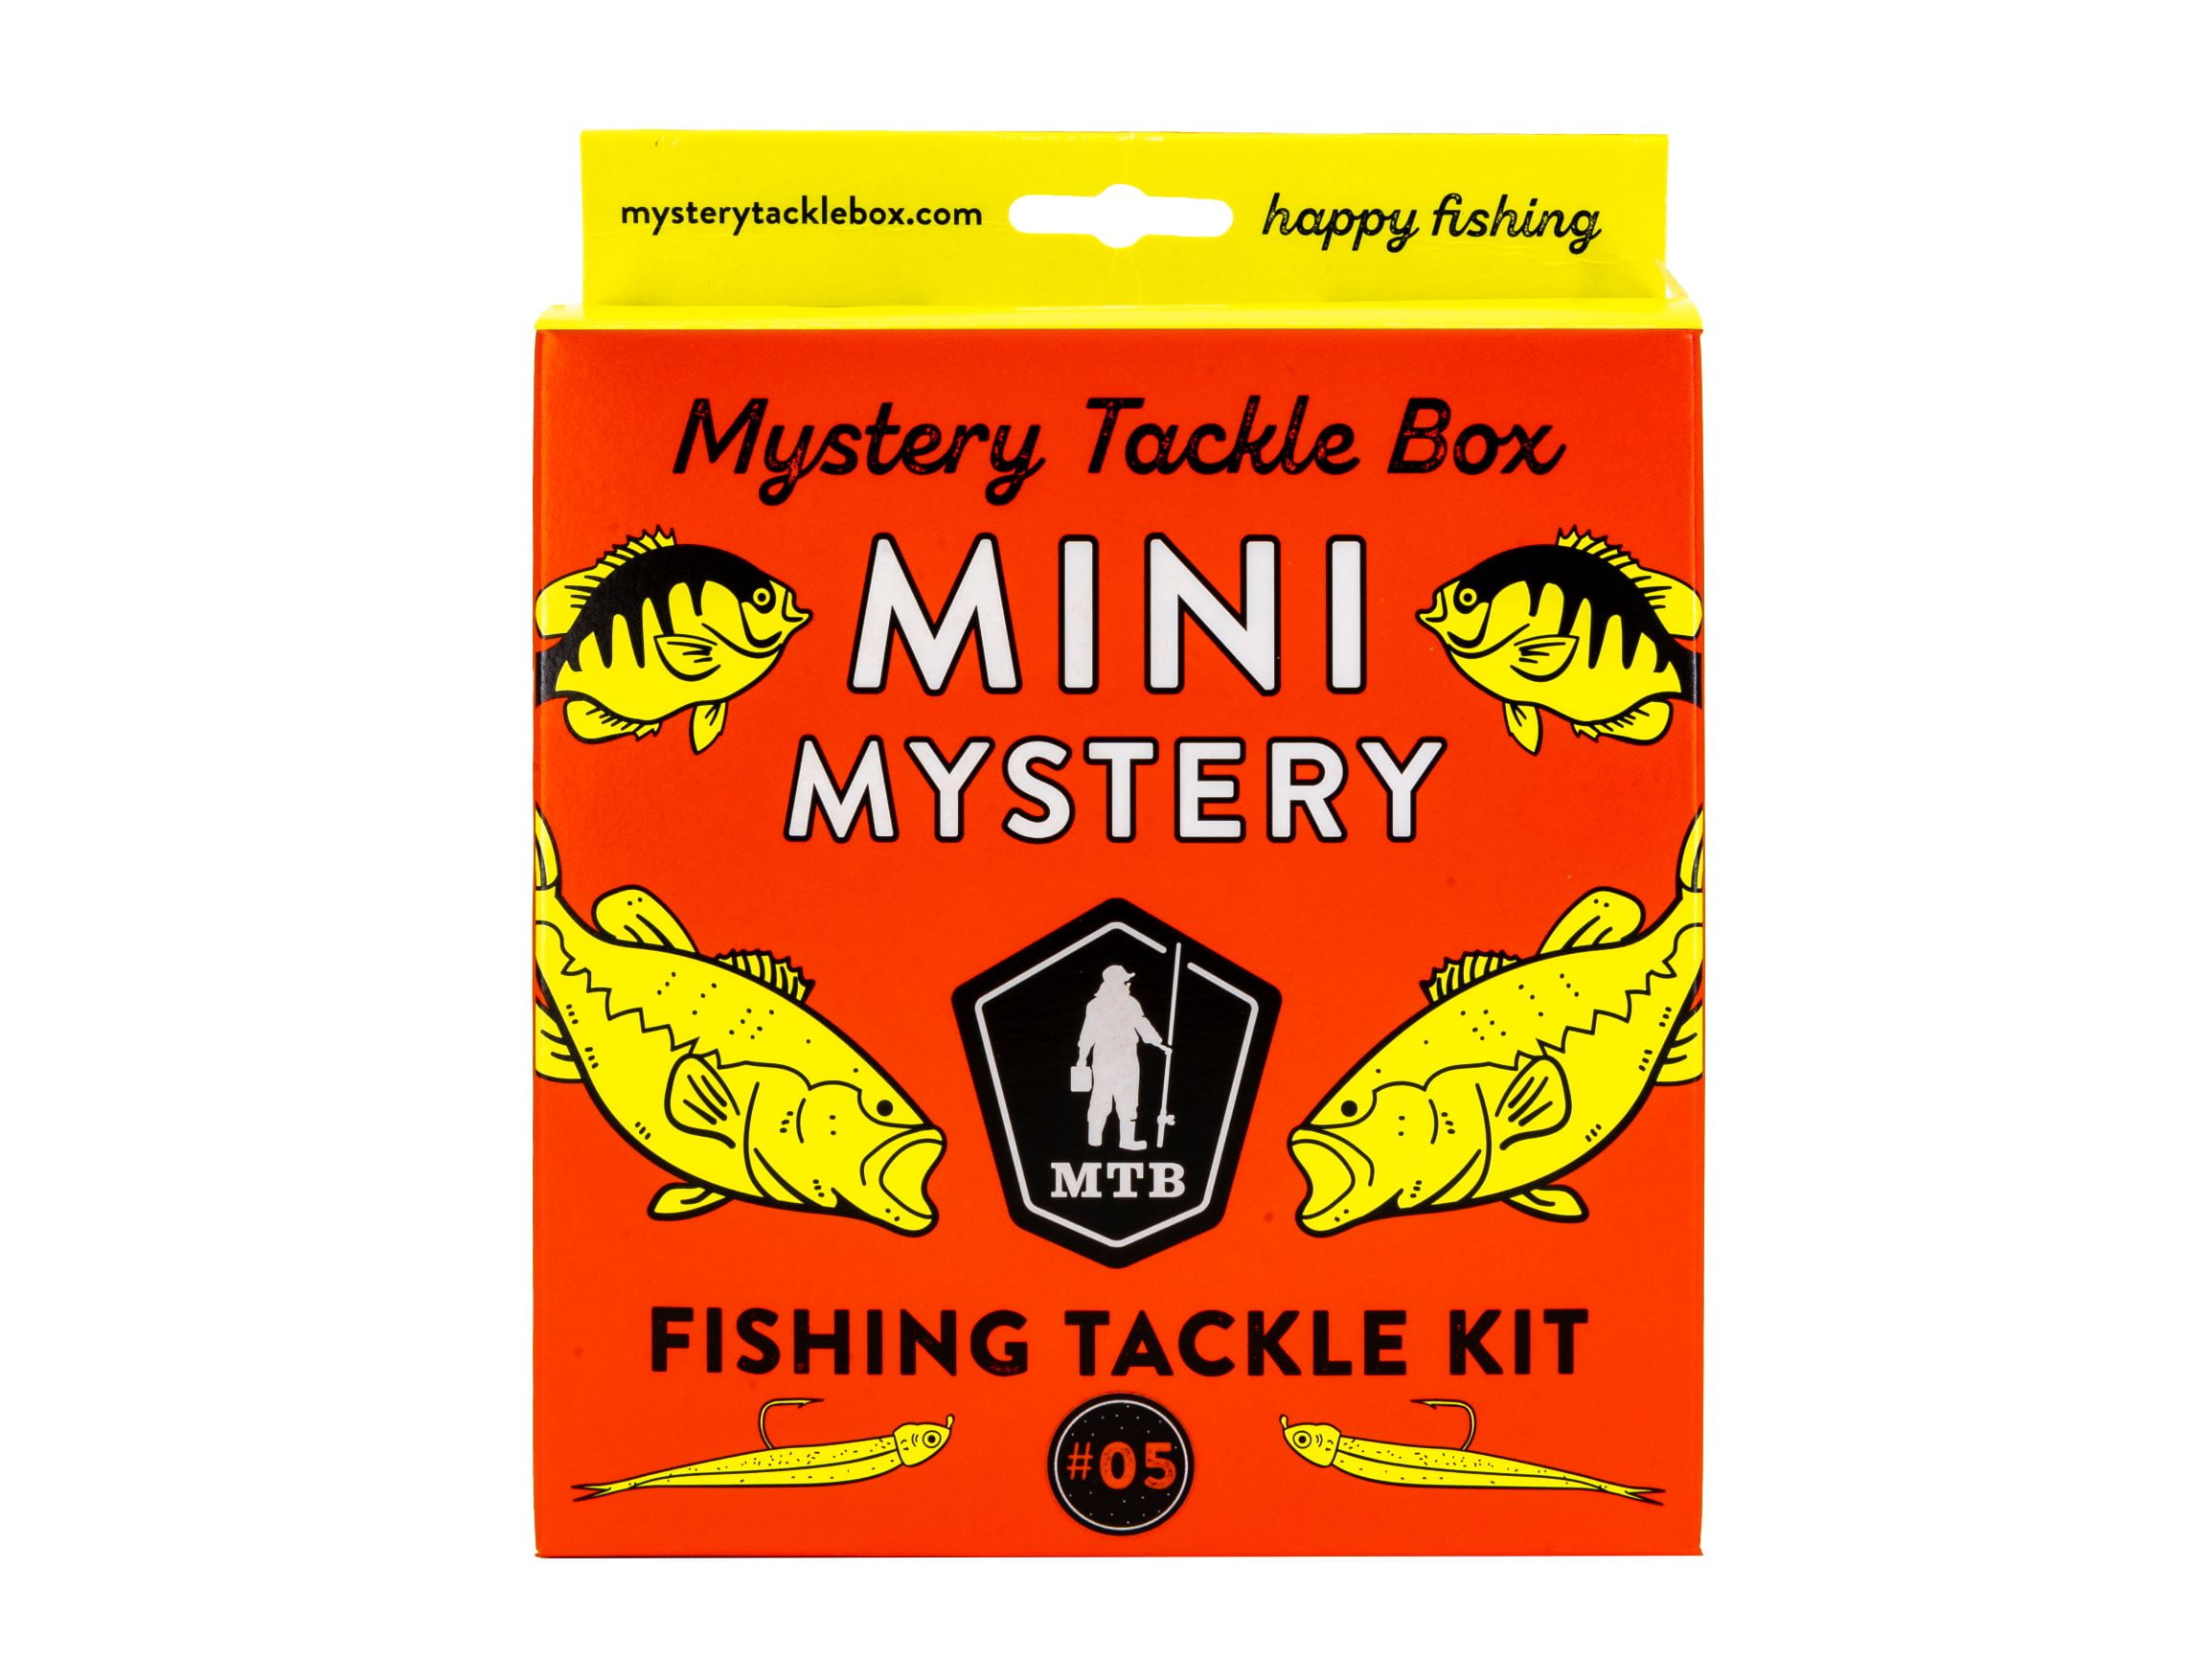 mtb mini mystery tackle box for only 5 dollars #16 #shorts  #bassfishing #fish #mtb 